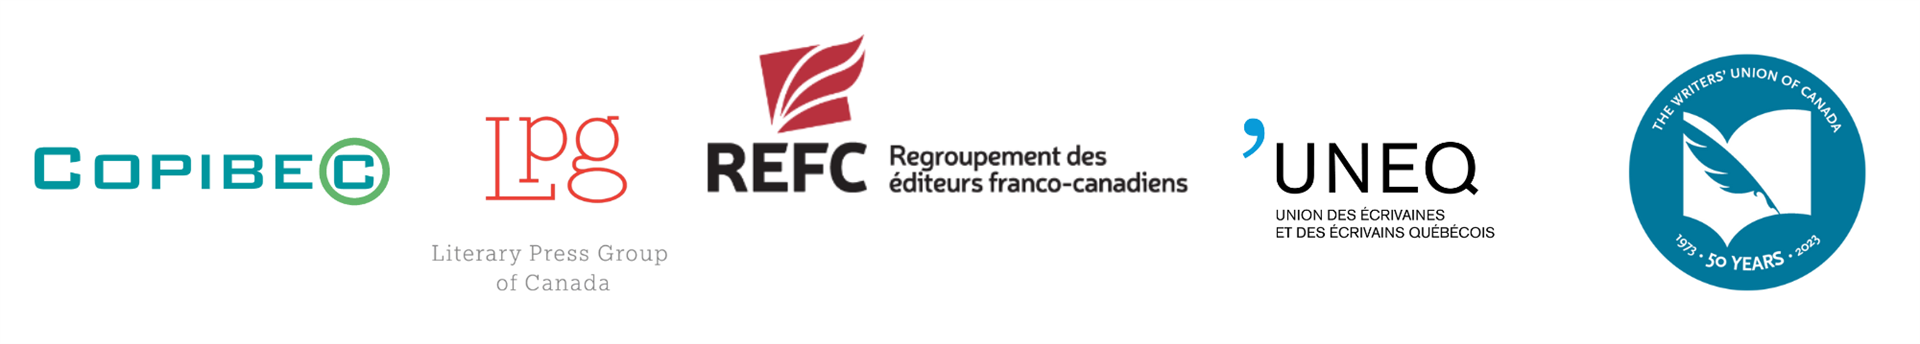 The logos of Copibec, LPG, REFC, UNEQ, and The Writers' Union of Canada.